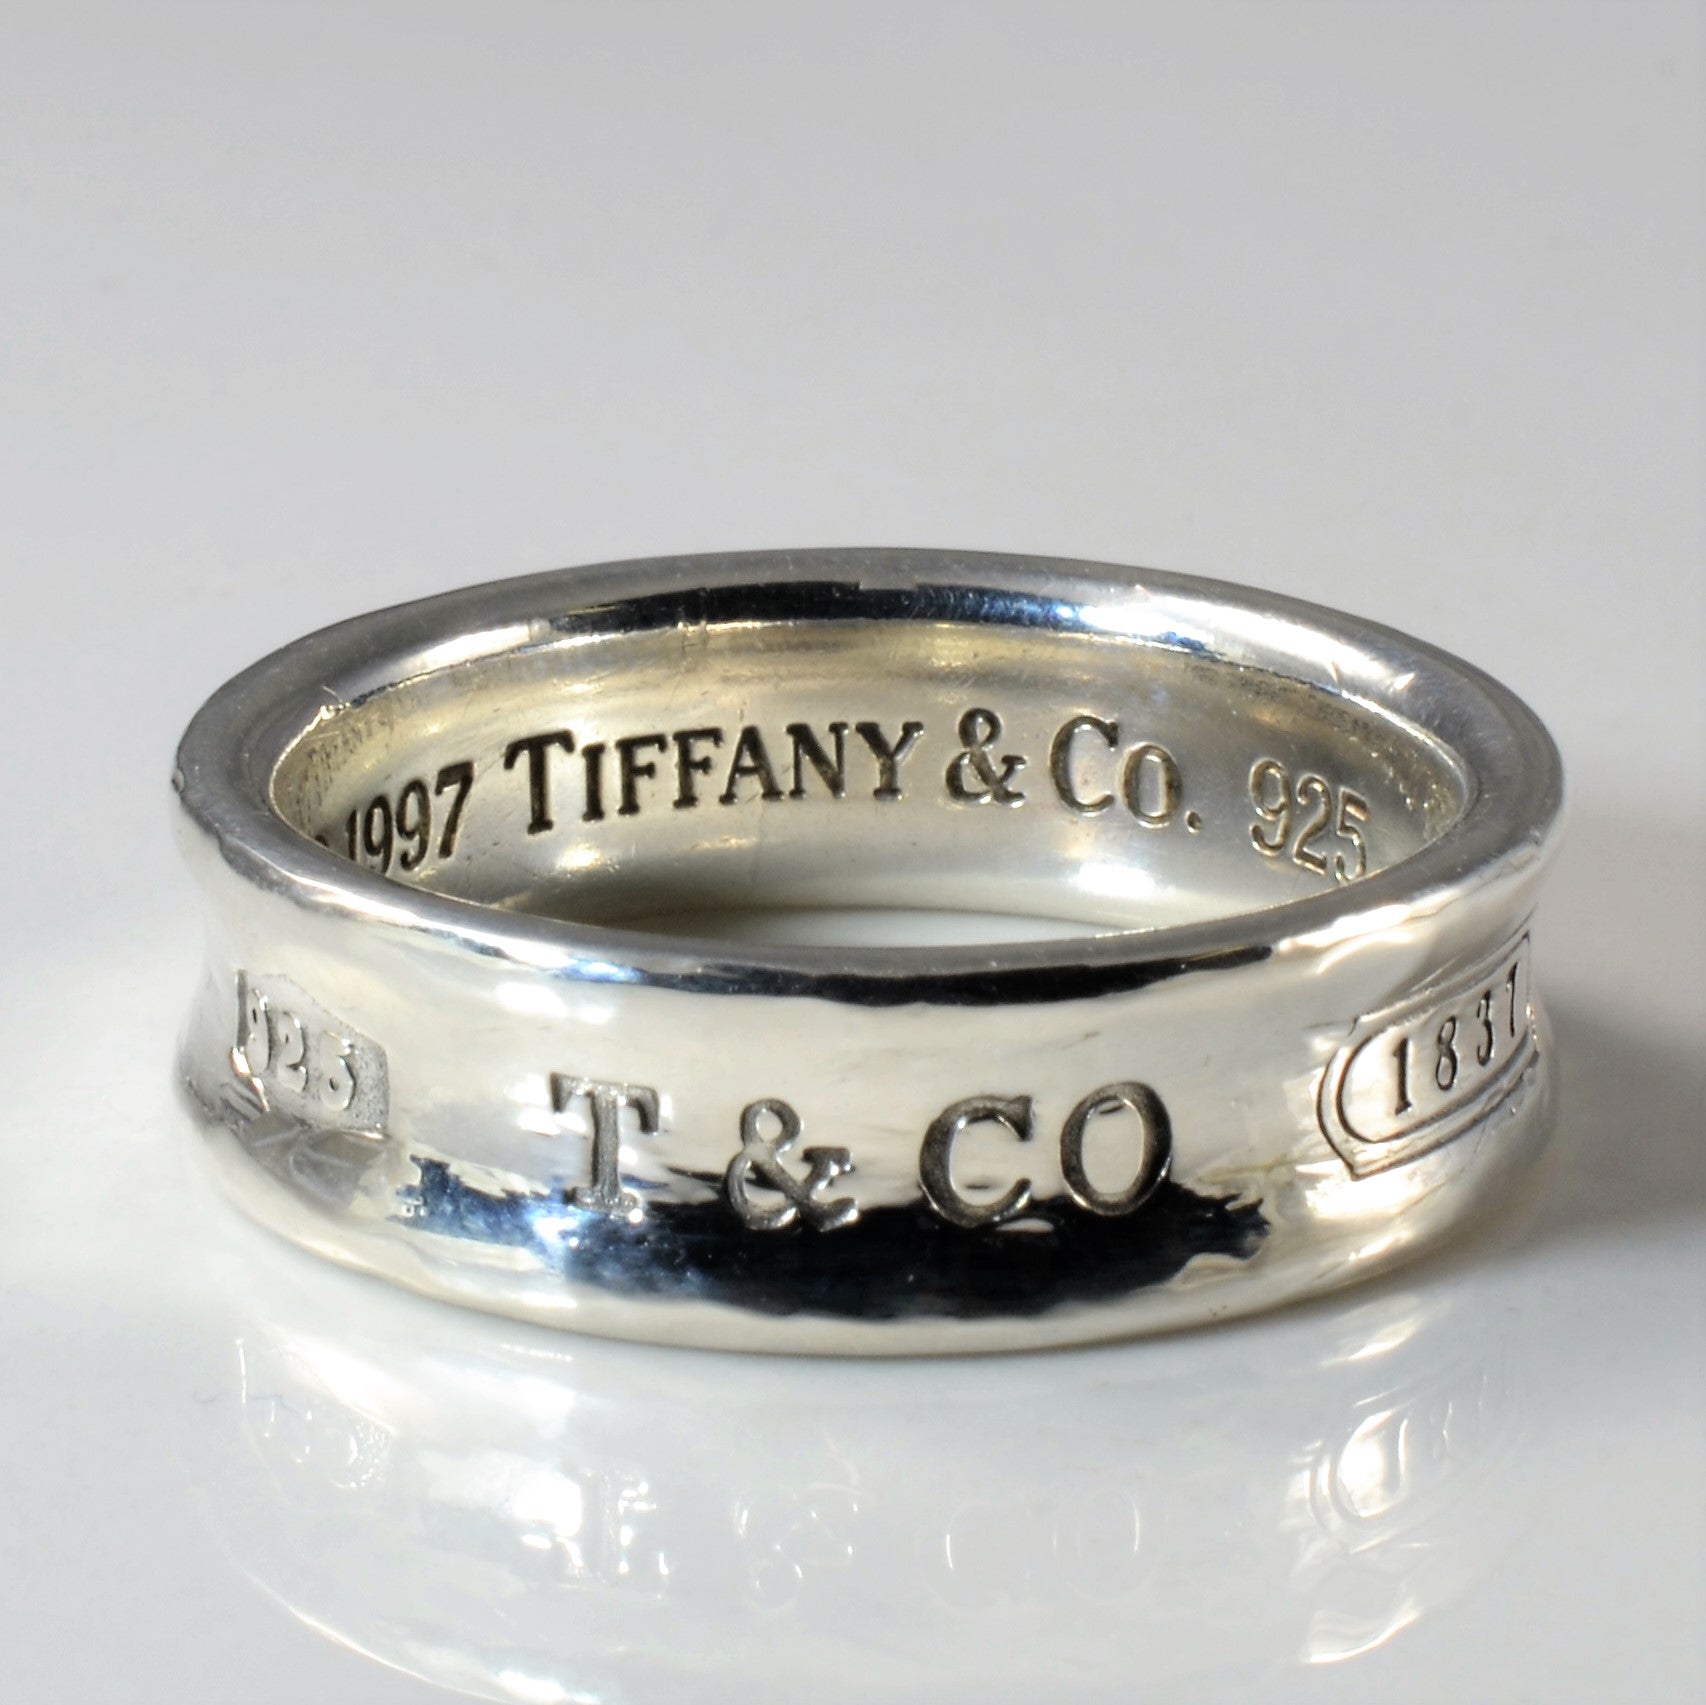 'Tiffany & Co.' 1837 Concave Ring | SZ 10.5 | - 100 Ways